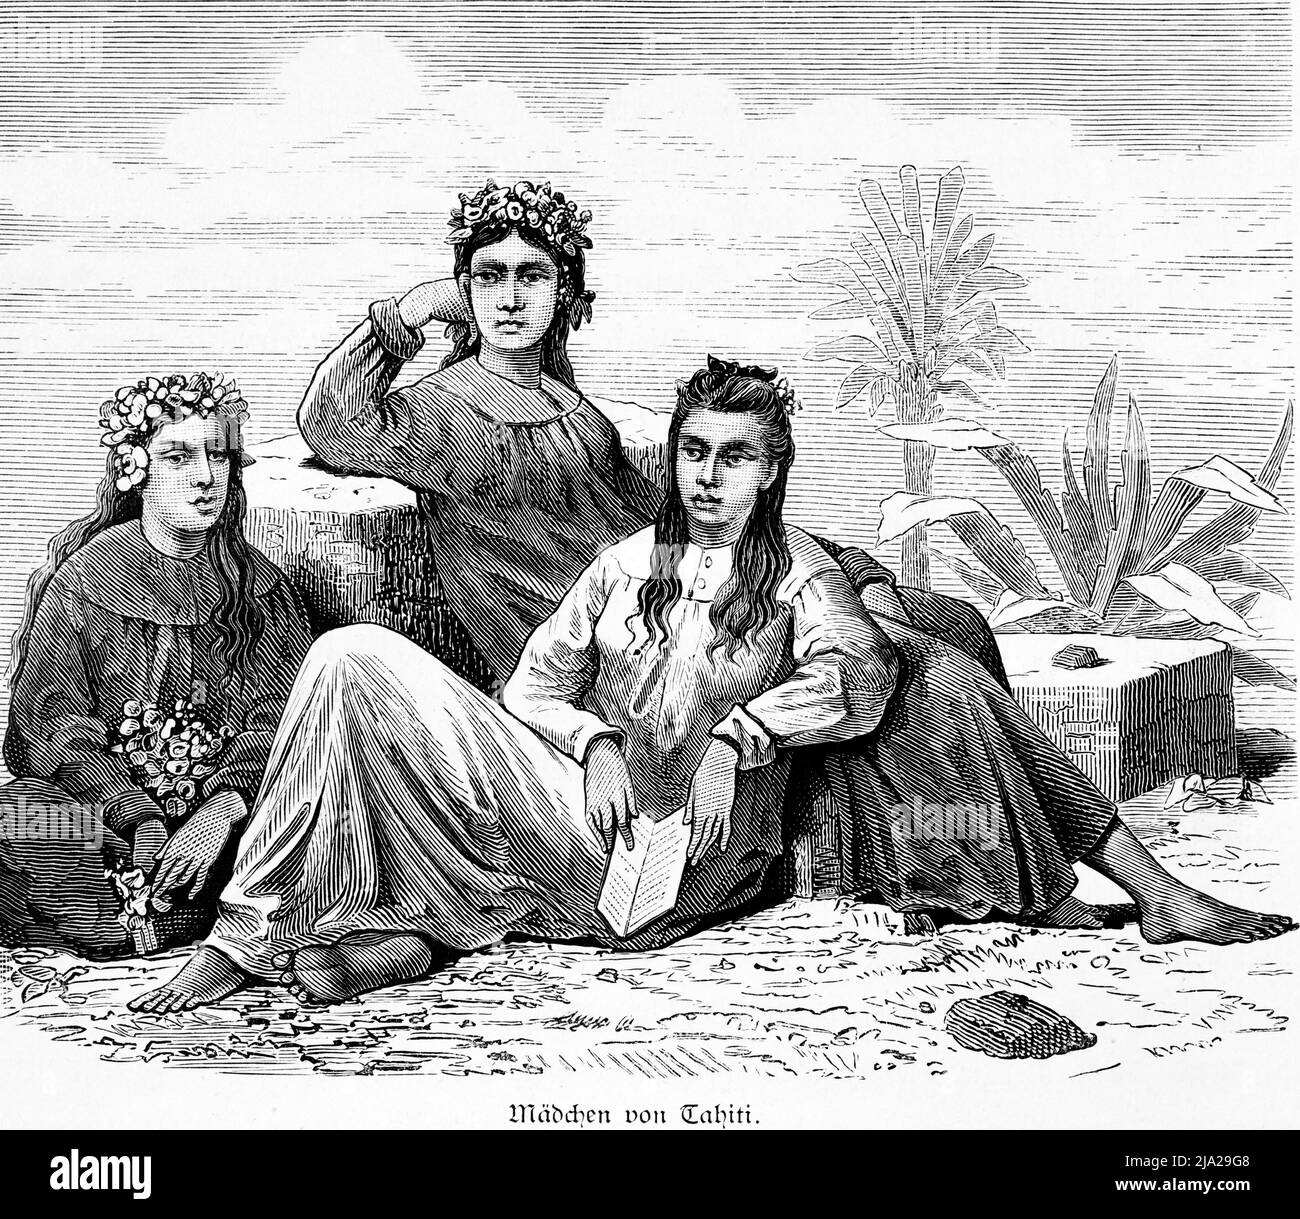 Three women, indigenous, young, headdress, long hair, sitting, book, palm tree, historical illustration 1881, Tahiti Stock Photo